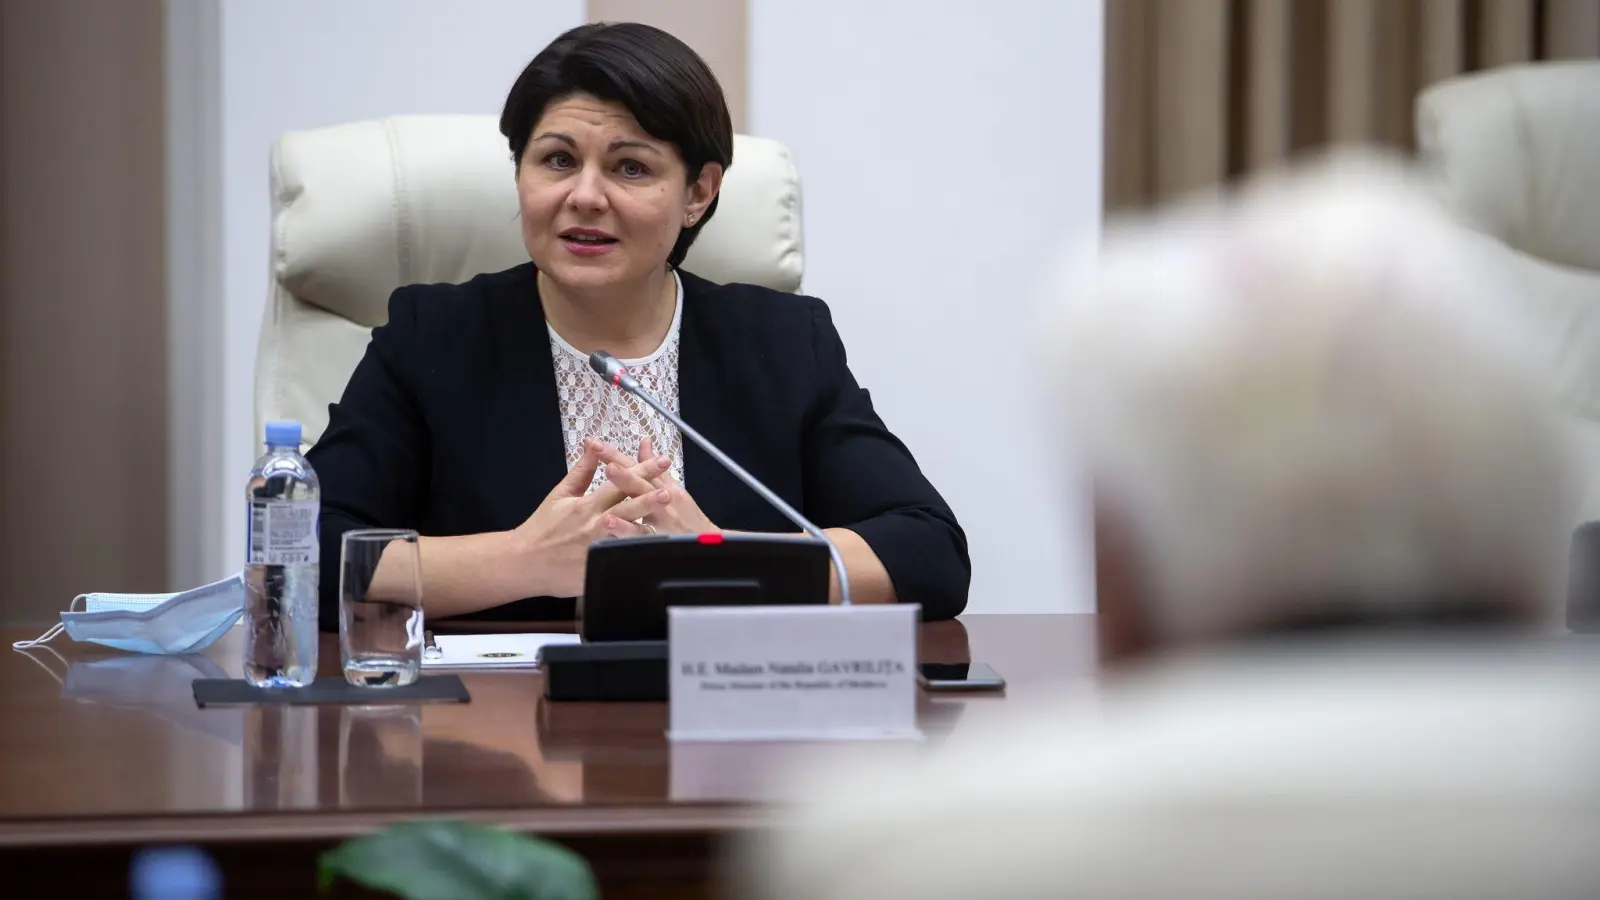 Natalia Gavrilița, Ministerpräsidentin der Republik Moldau, in Chisinau. (Foto: Bernd von Jutrczenka/dpa)